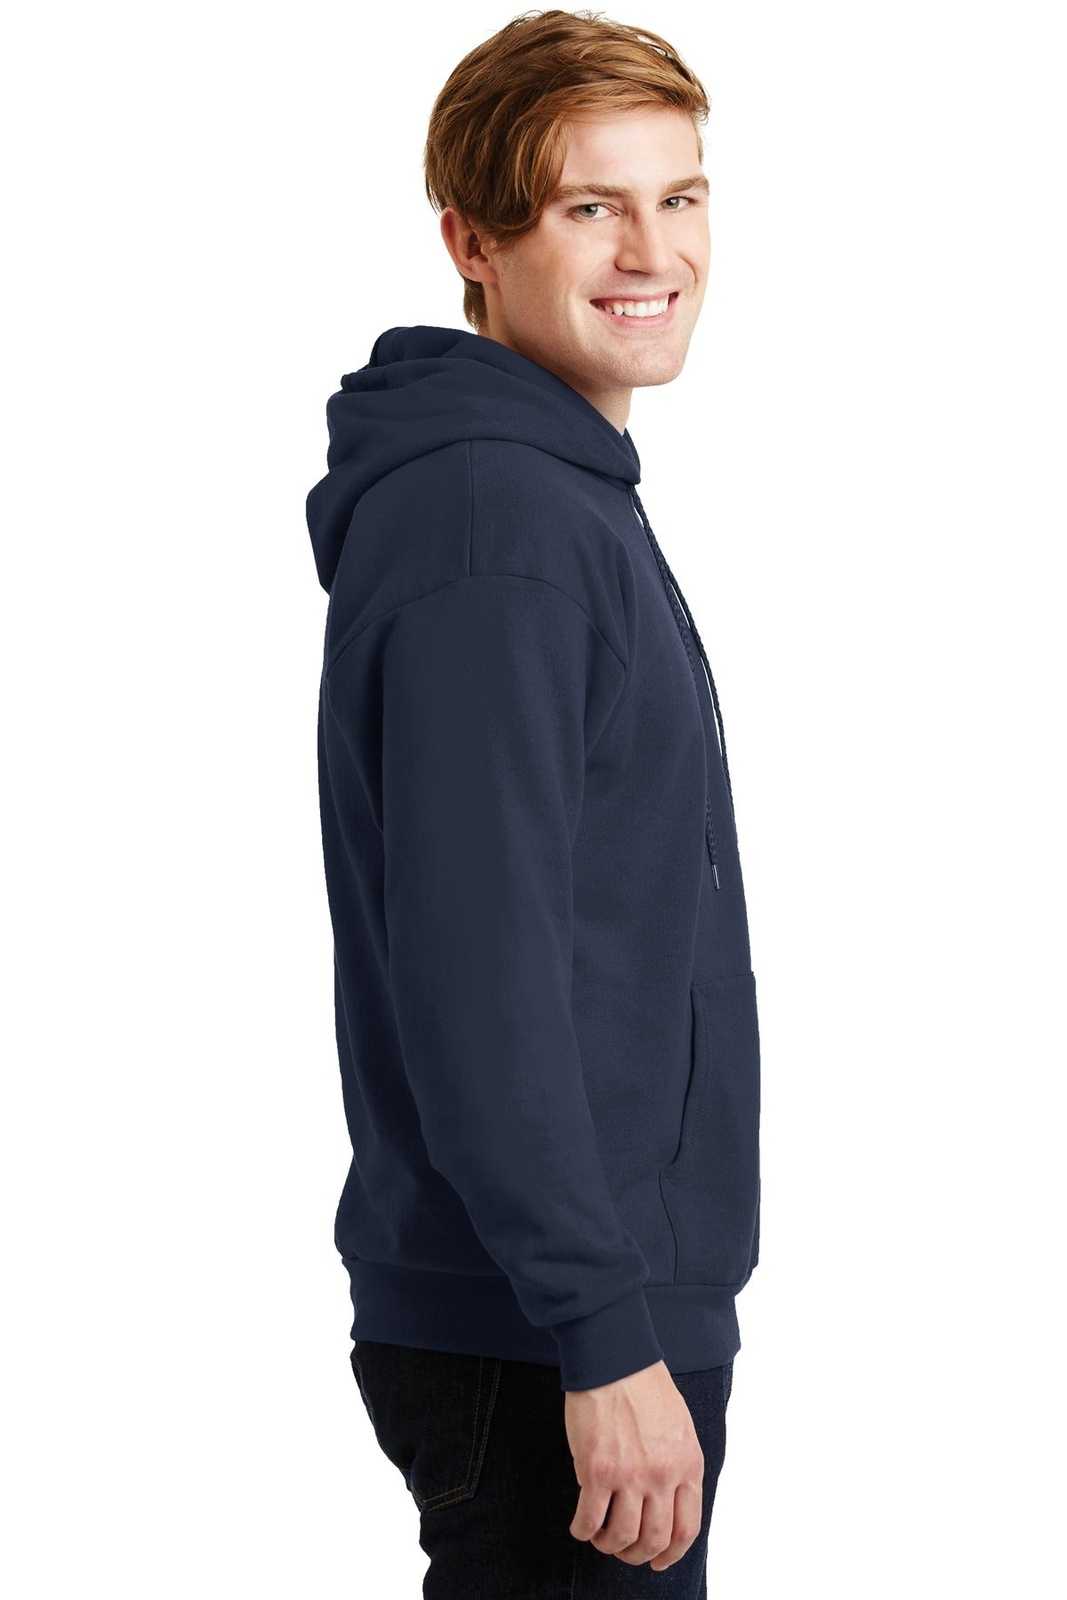 Hanes P170 Ecosmart Pullover Hooded Sweatshirt - Navy - HIT a Double